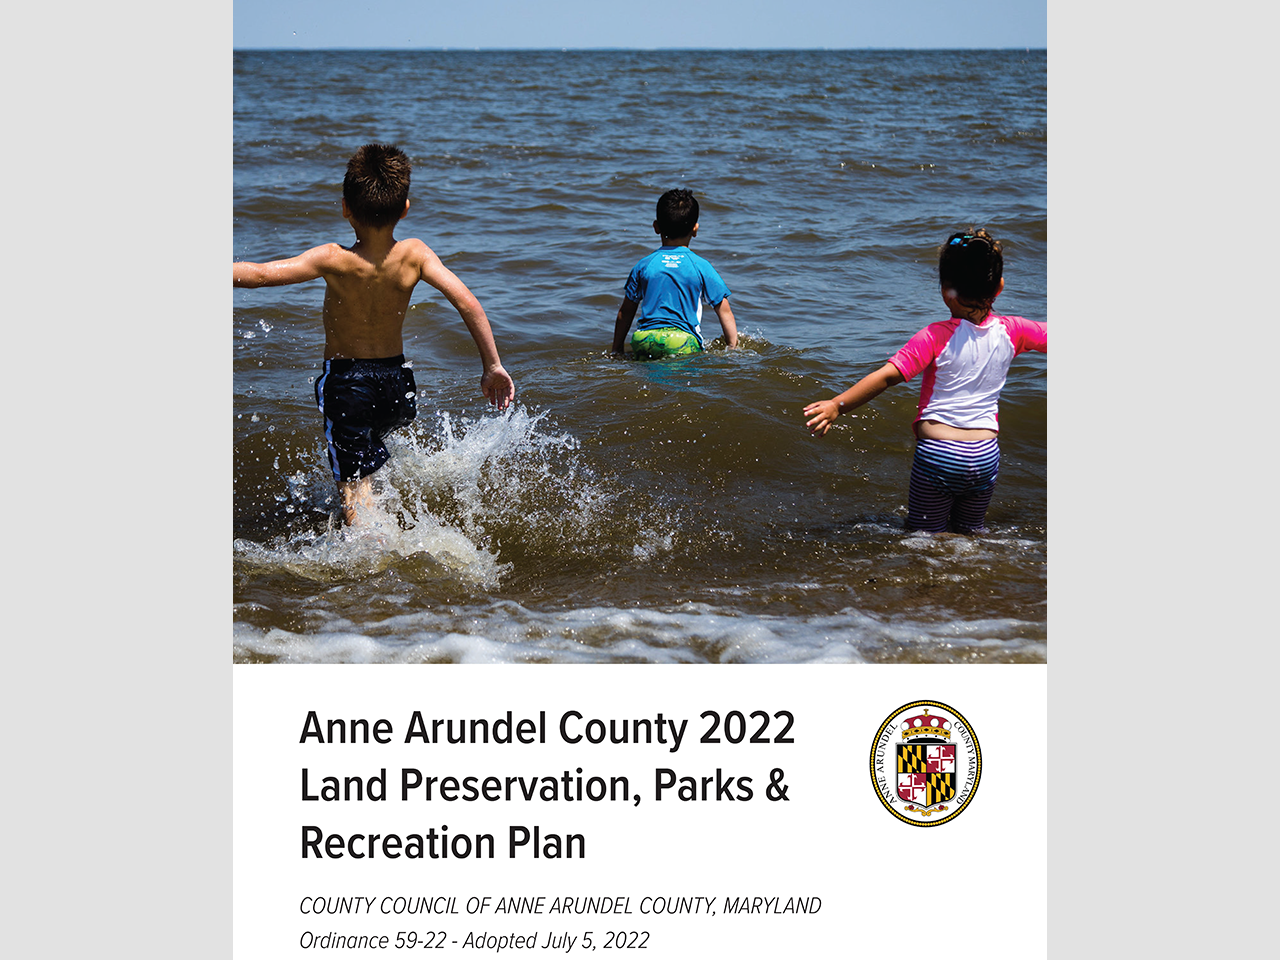 Land Preservation Parks and Recreation Plan